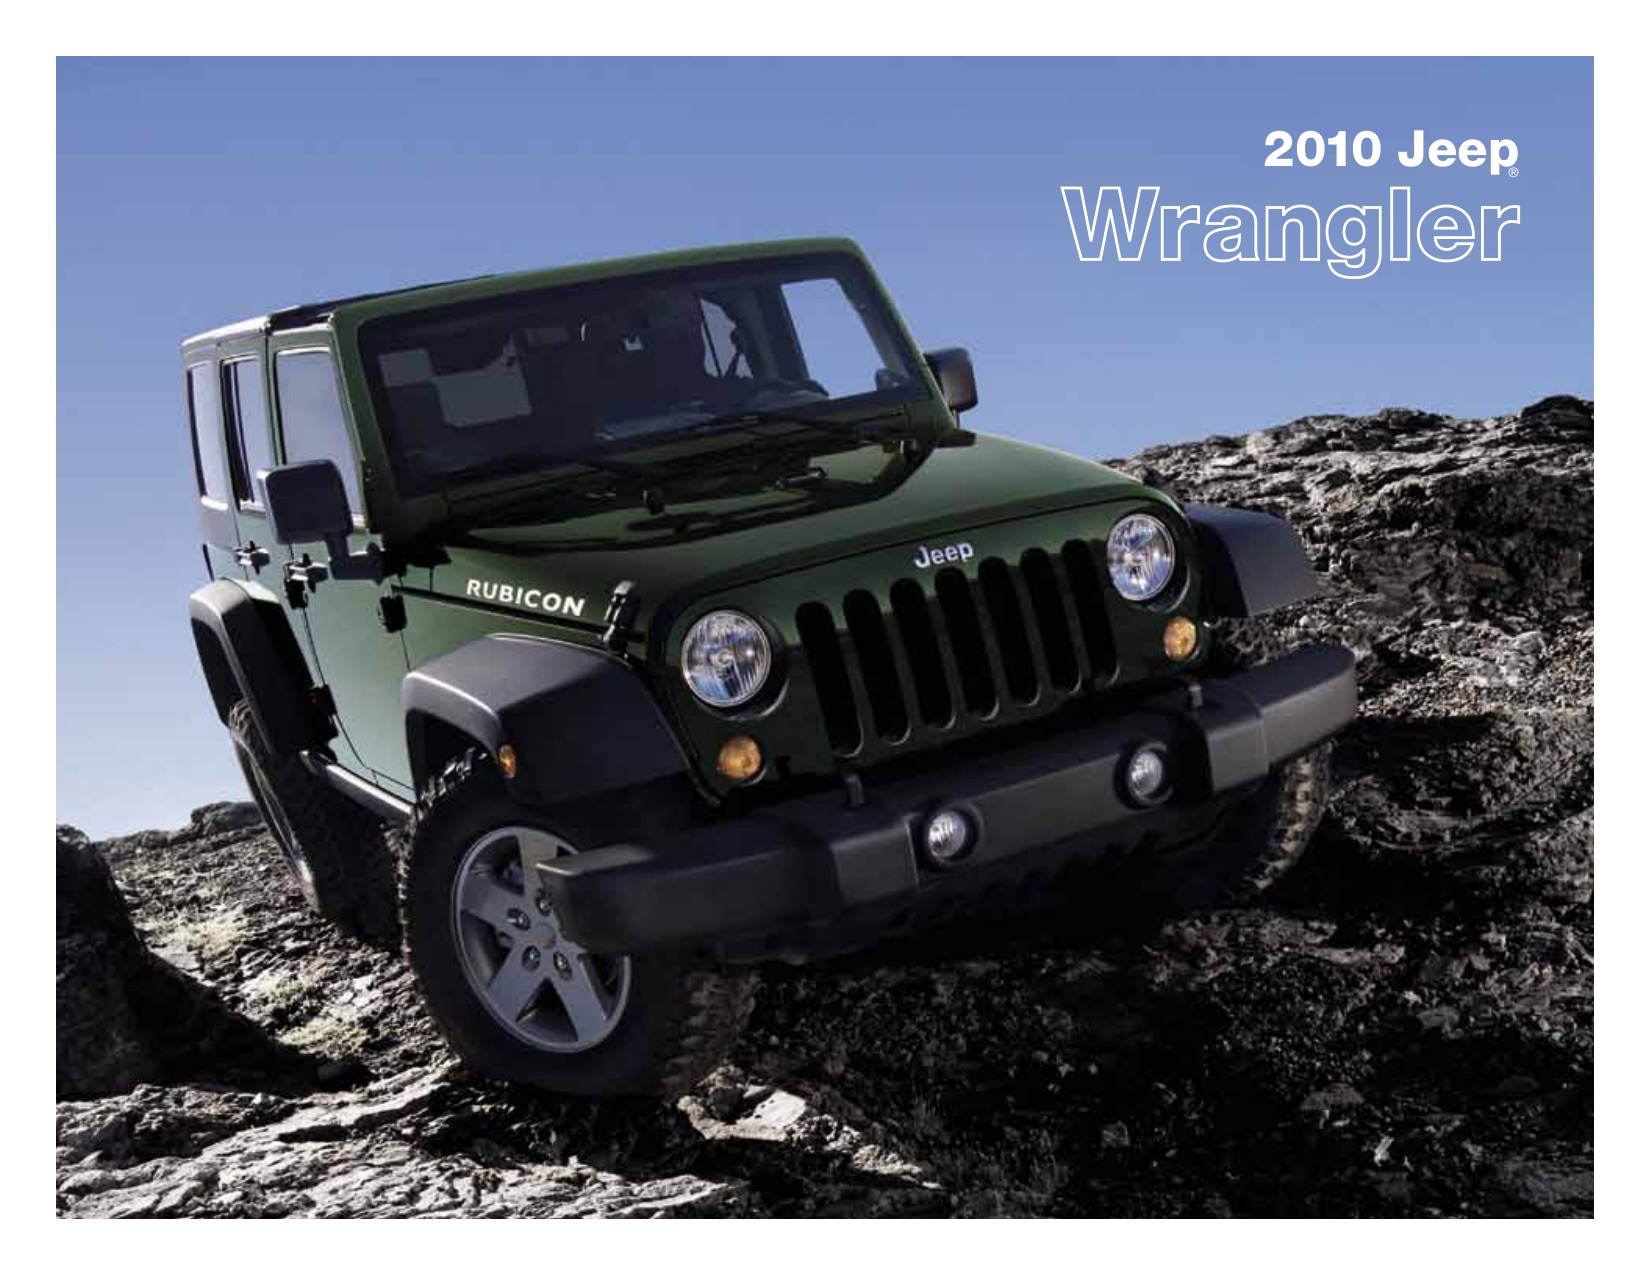 2010 Jeep Wrangler Brochure